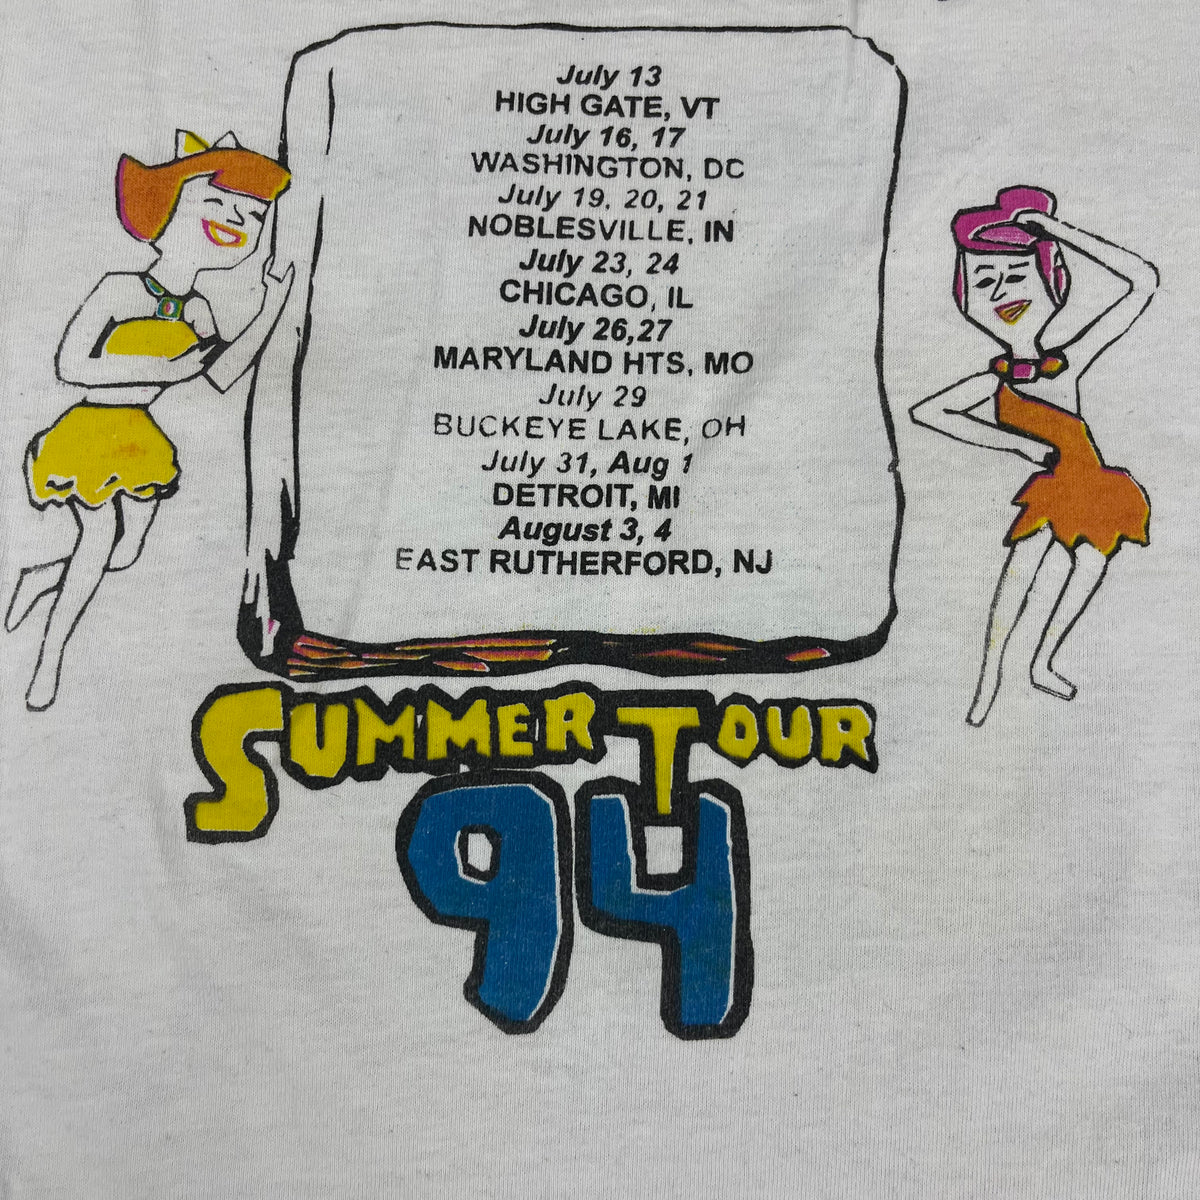 Vintage The Grateful Dead &quot;Yabba Dabba Doobie&quot; Summer 94 T-Shirt